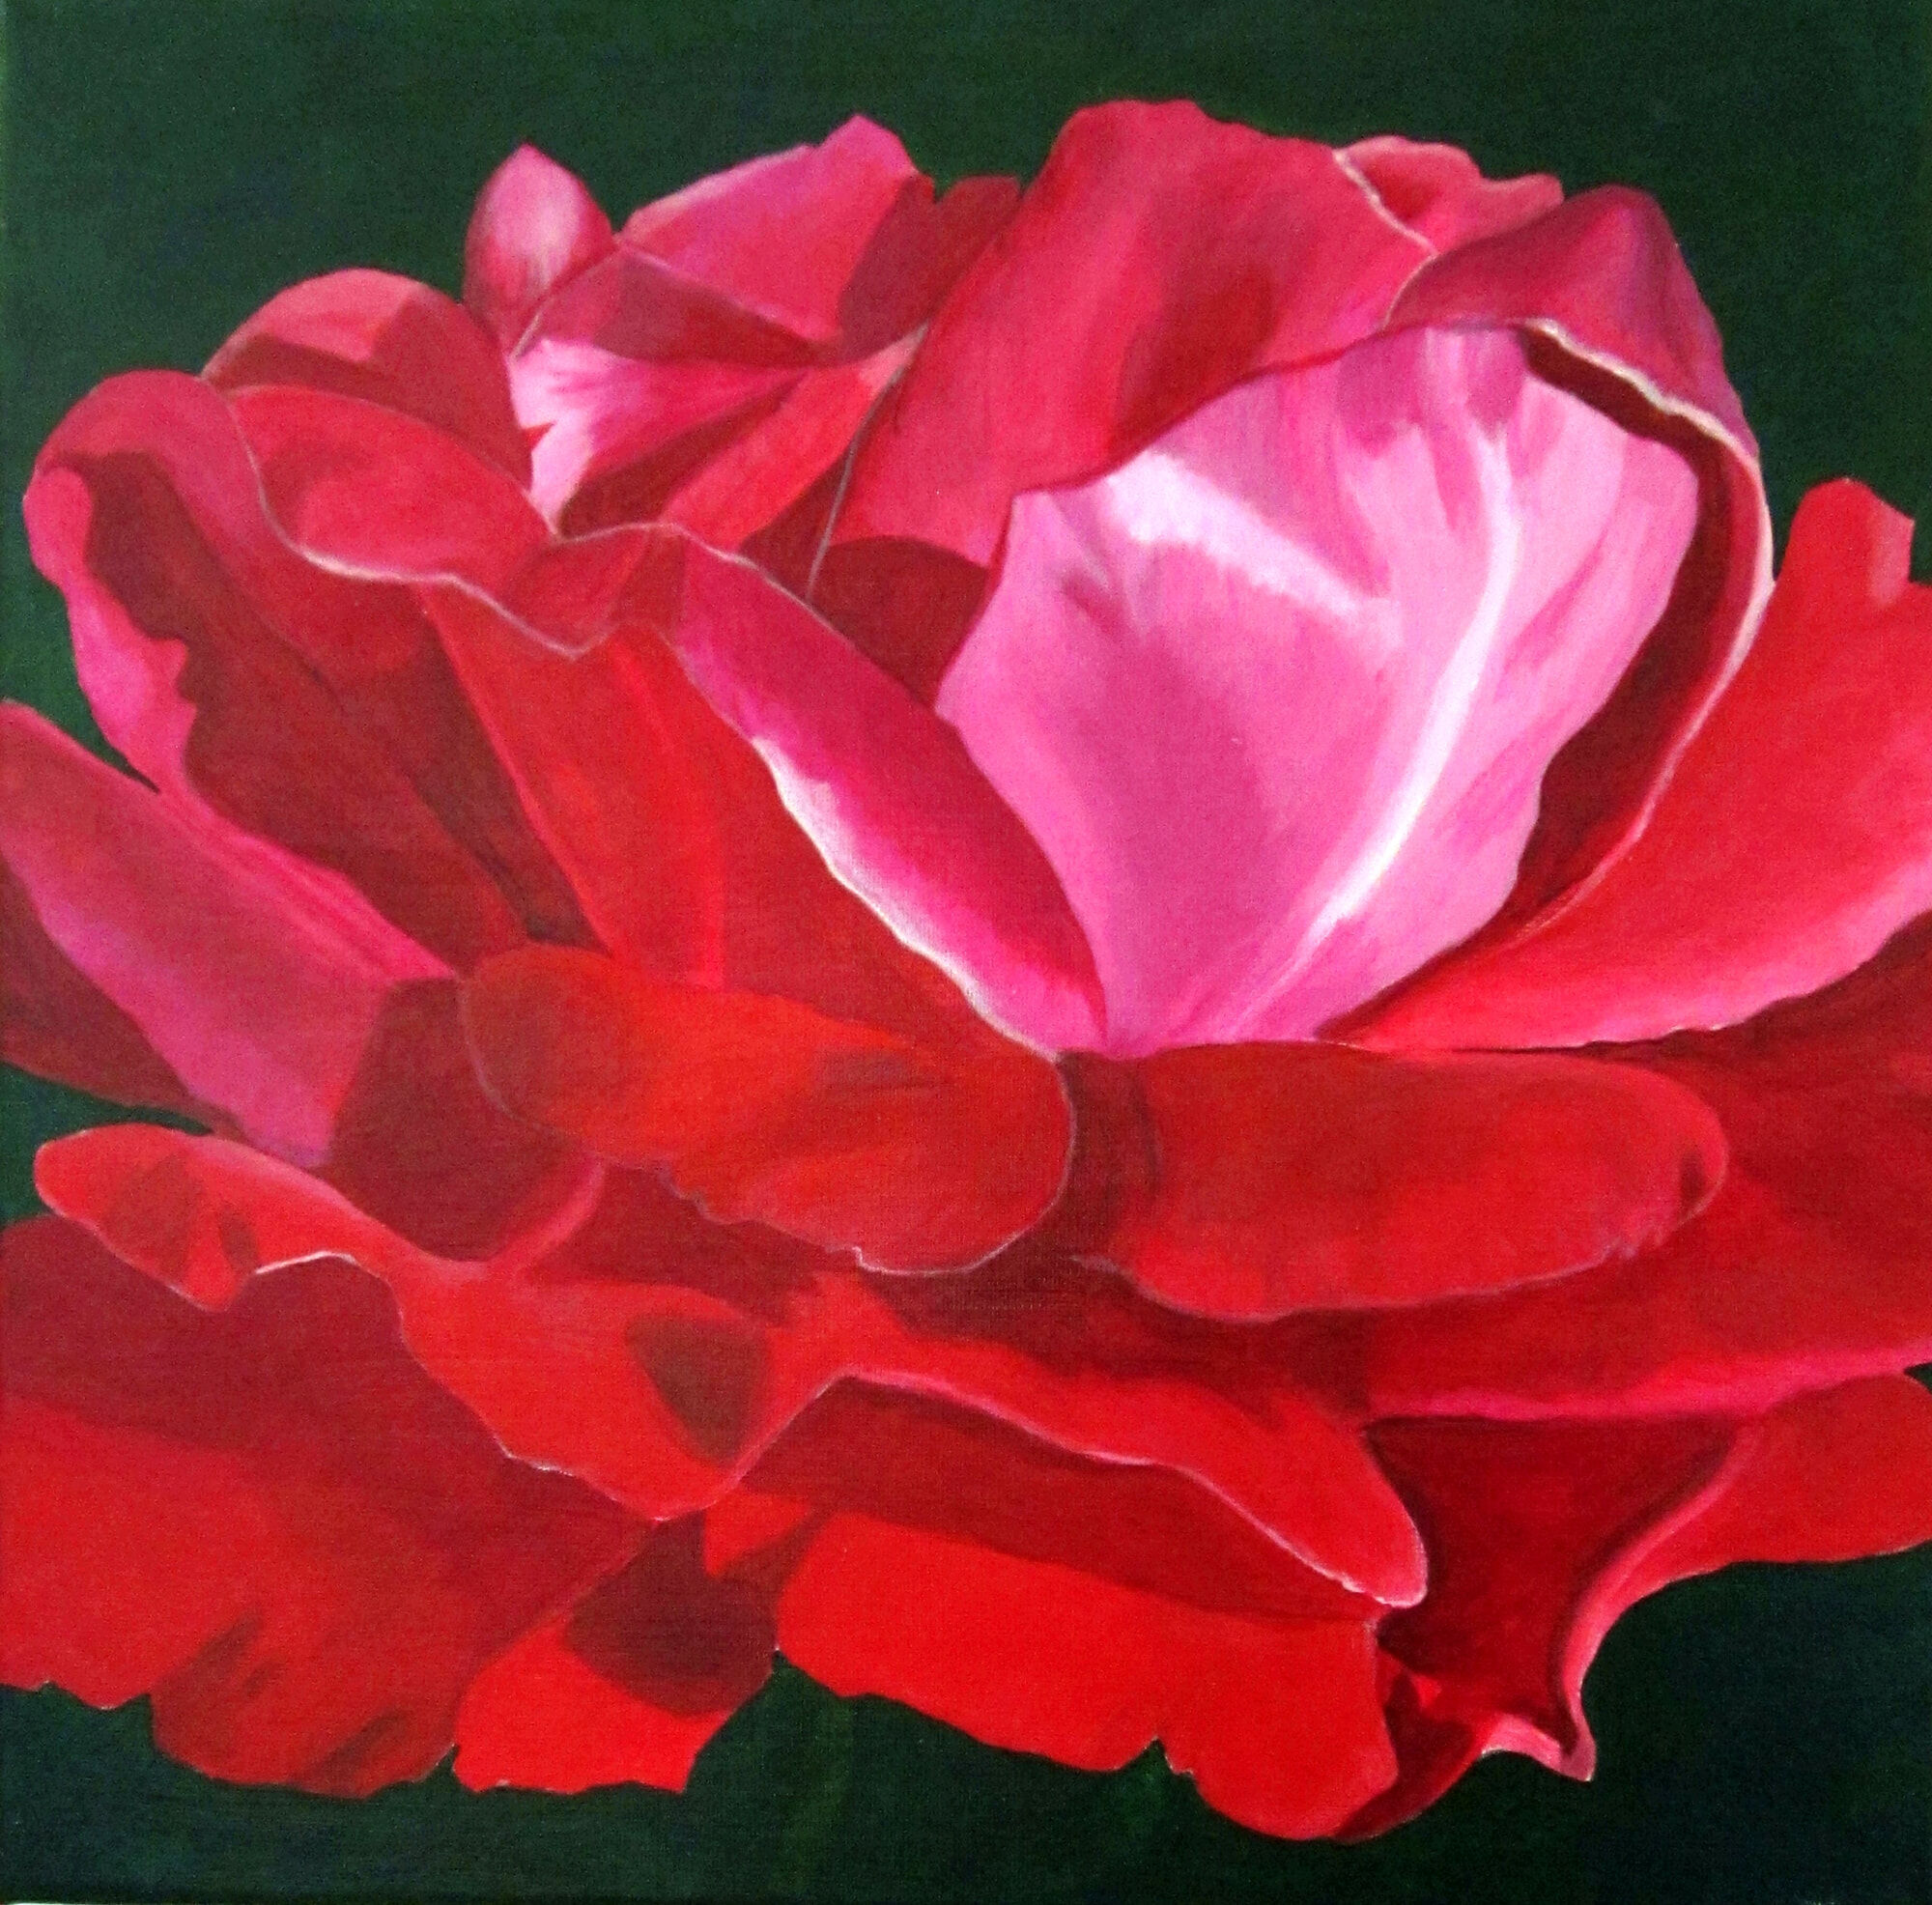 acrylic painting of a crimson rose by artist Shona Jones